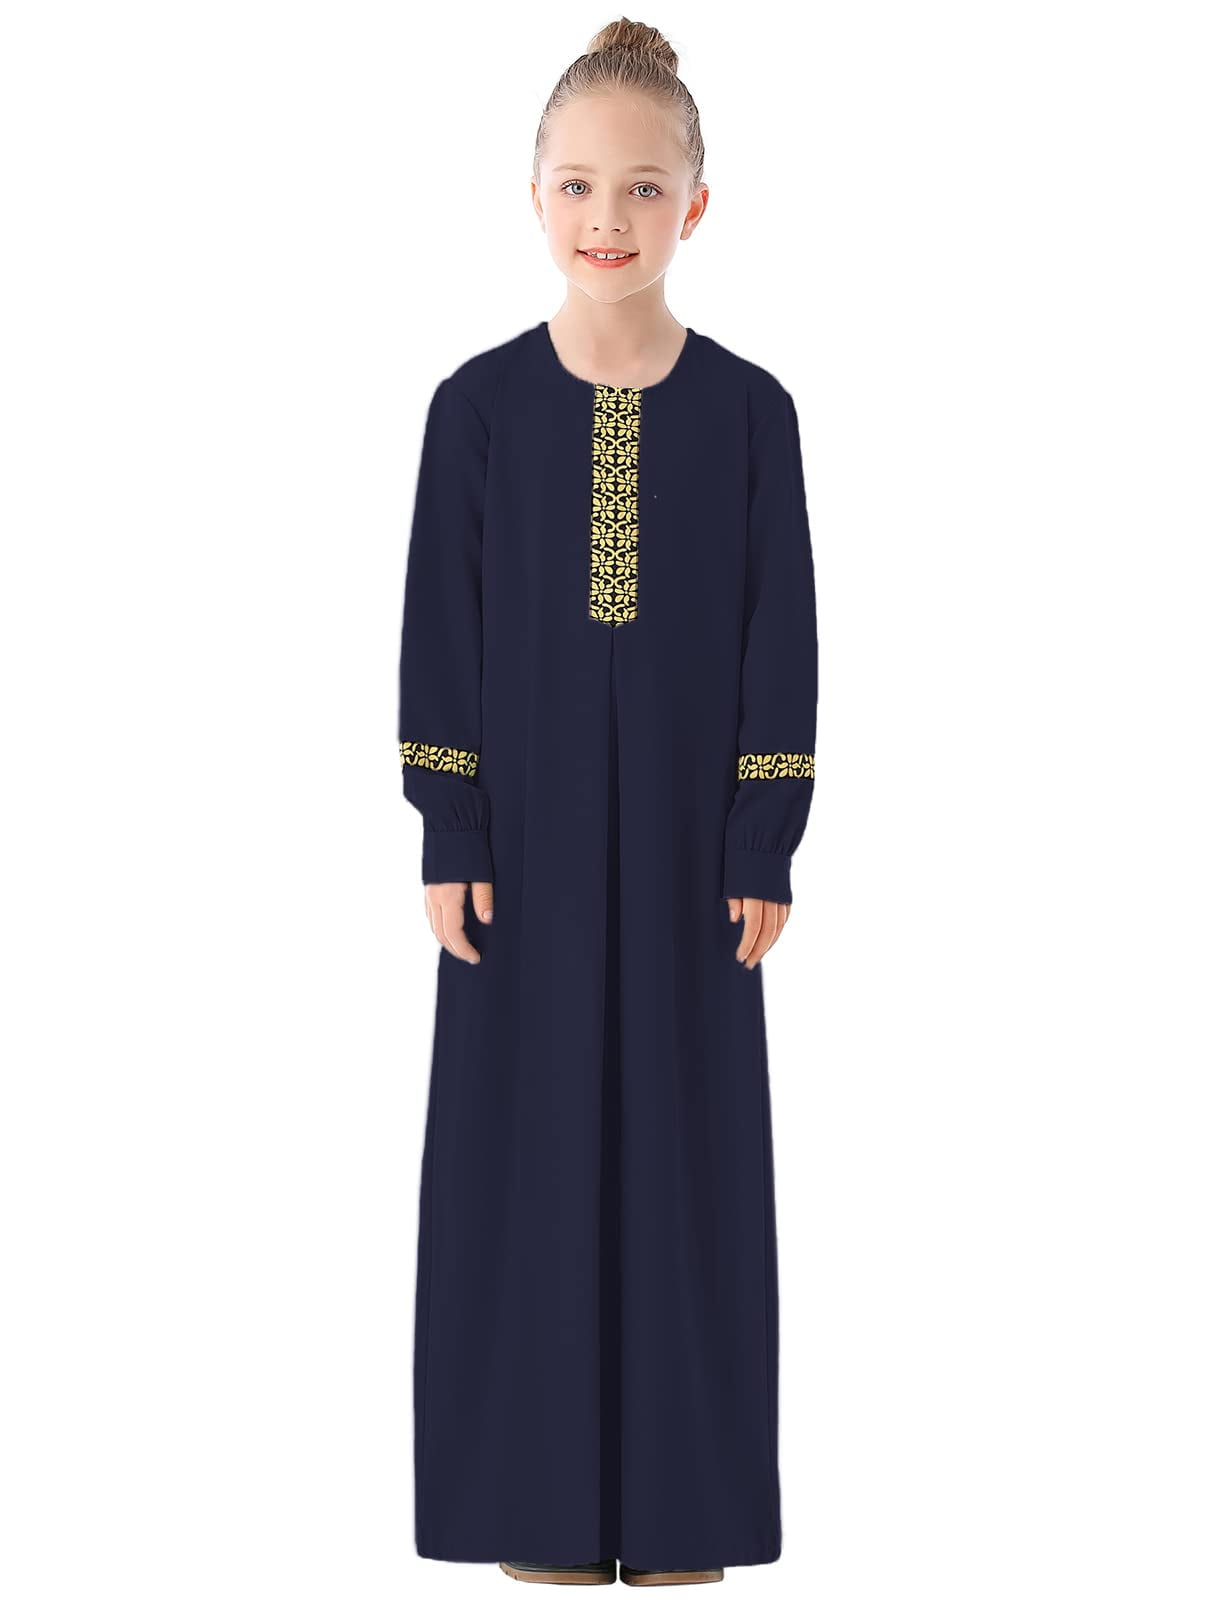 Kids Girls Flower Printed Dress Muslim Islamic Robe Long Sleeve Kaftan Abaya New 